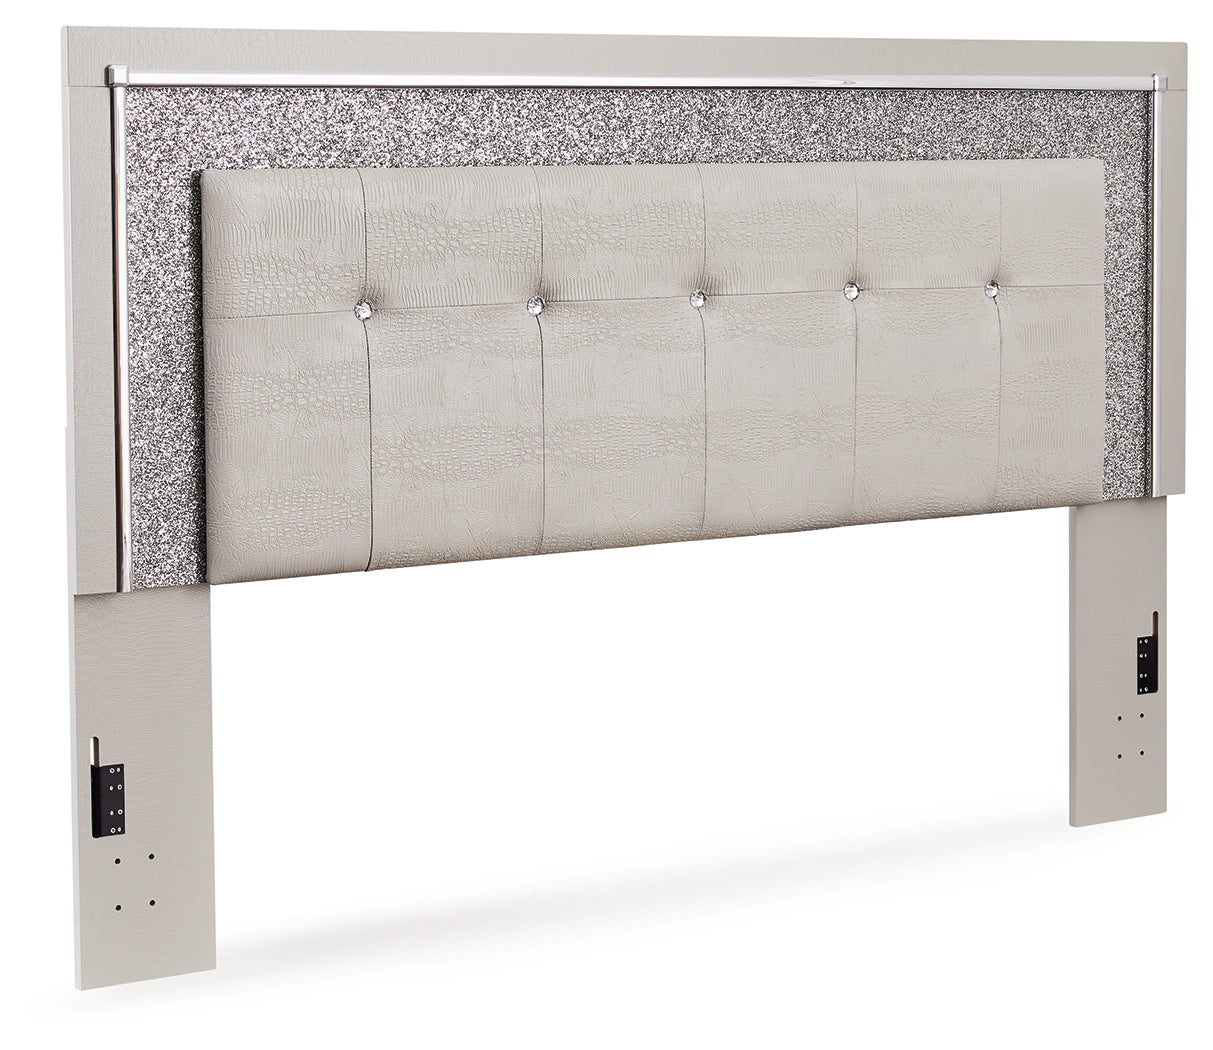 Zyniden King Upholstered Panel Headboard, Dresser and Mirror